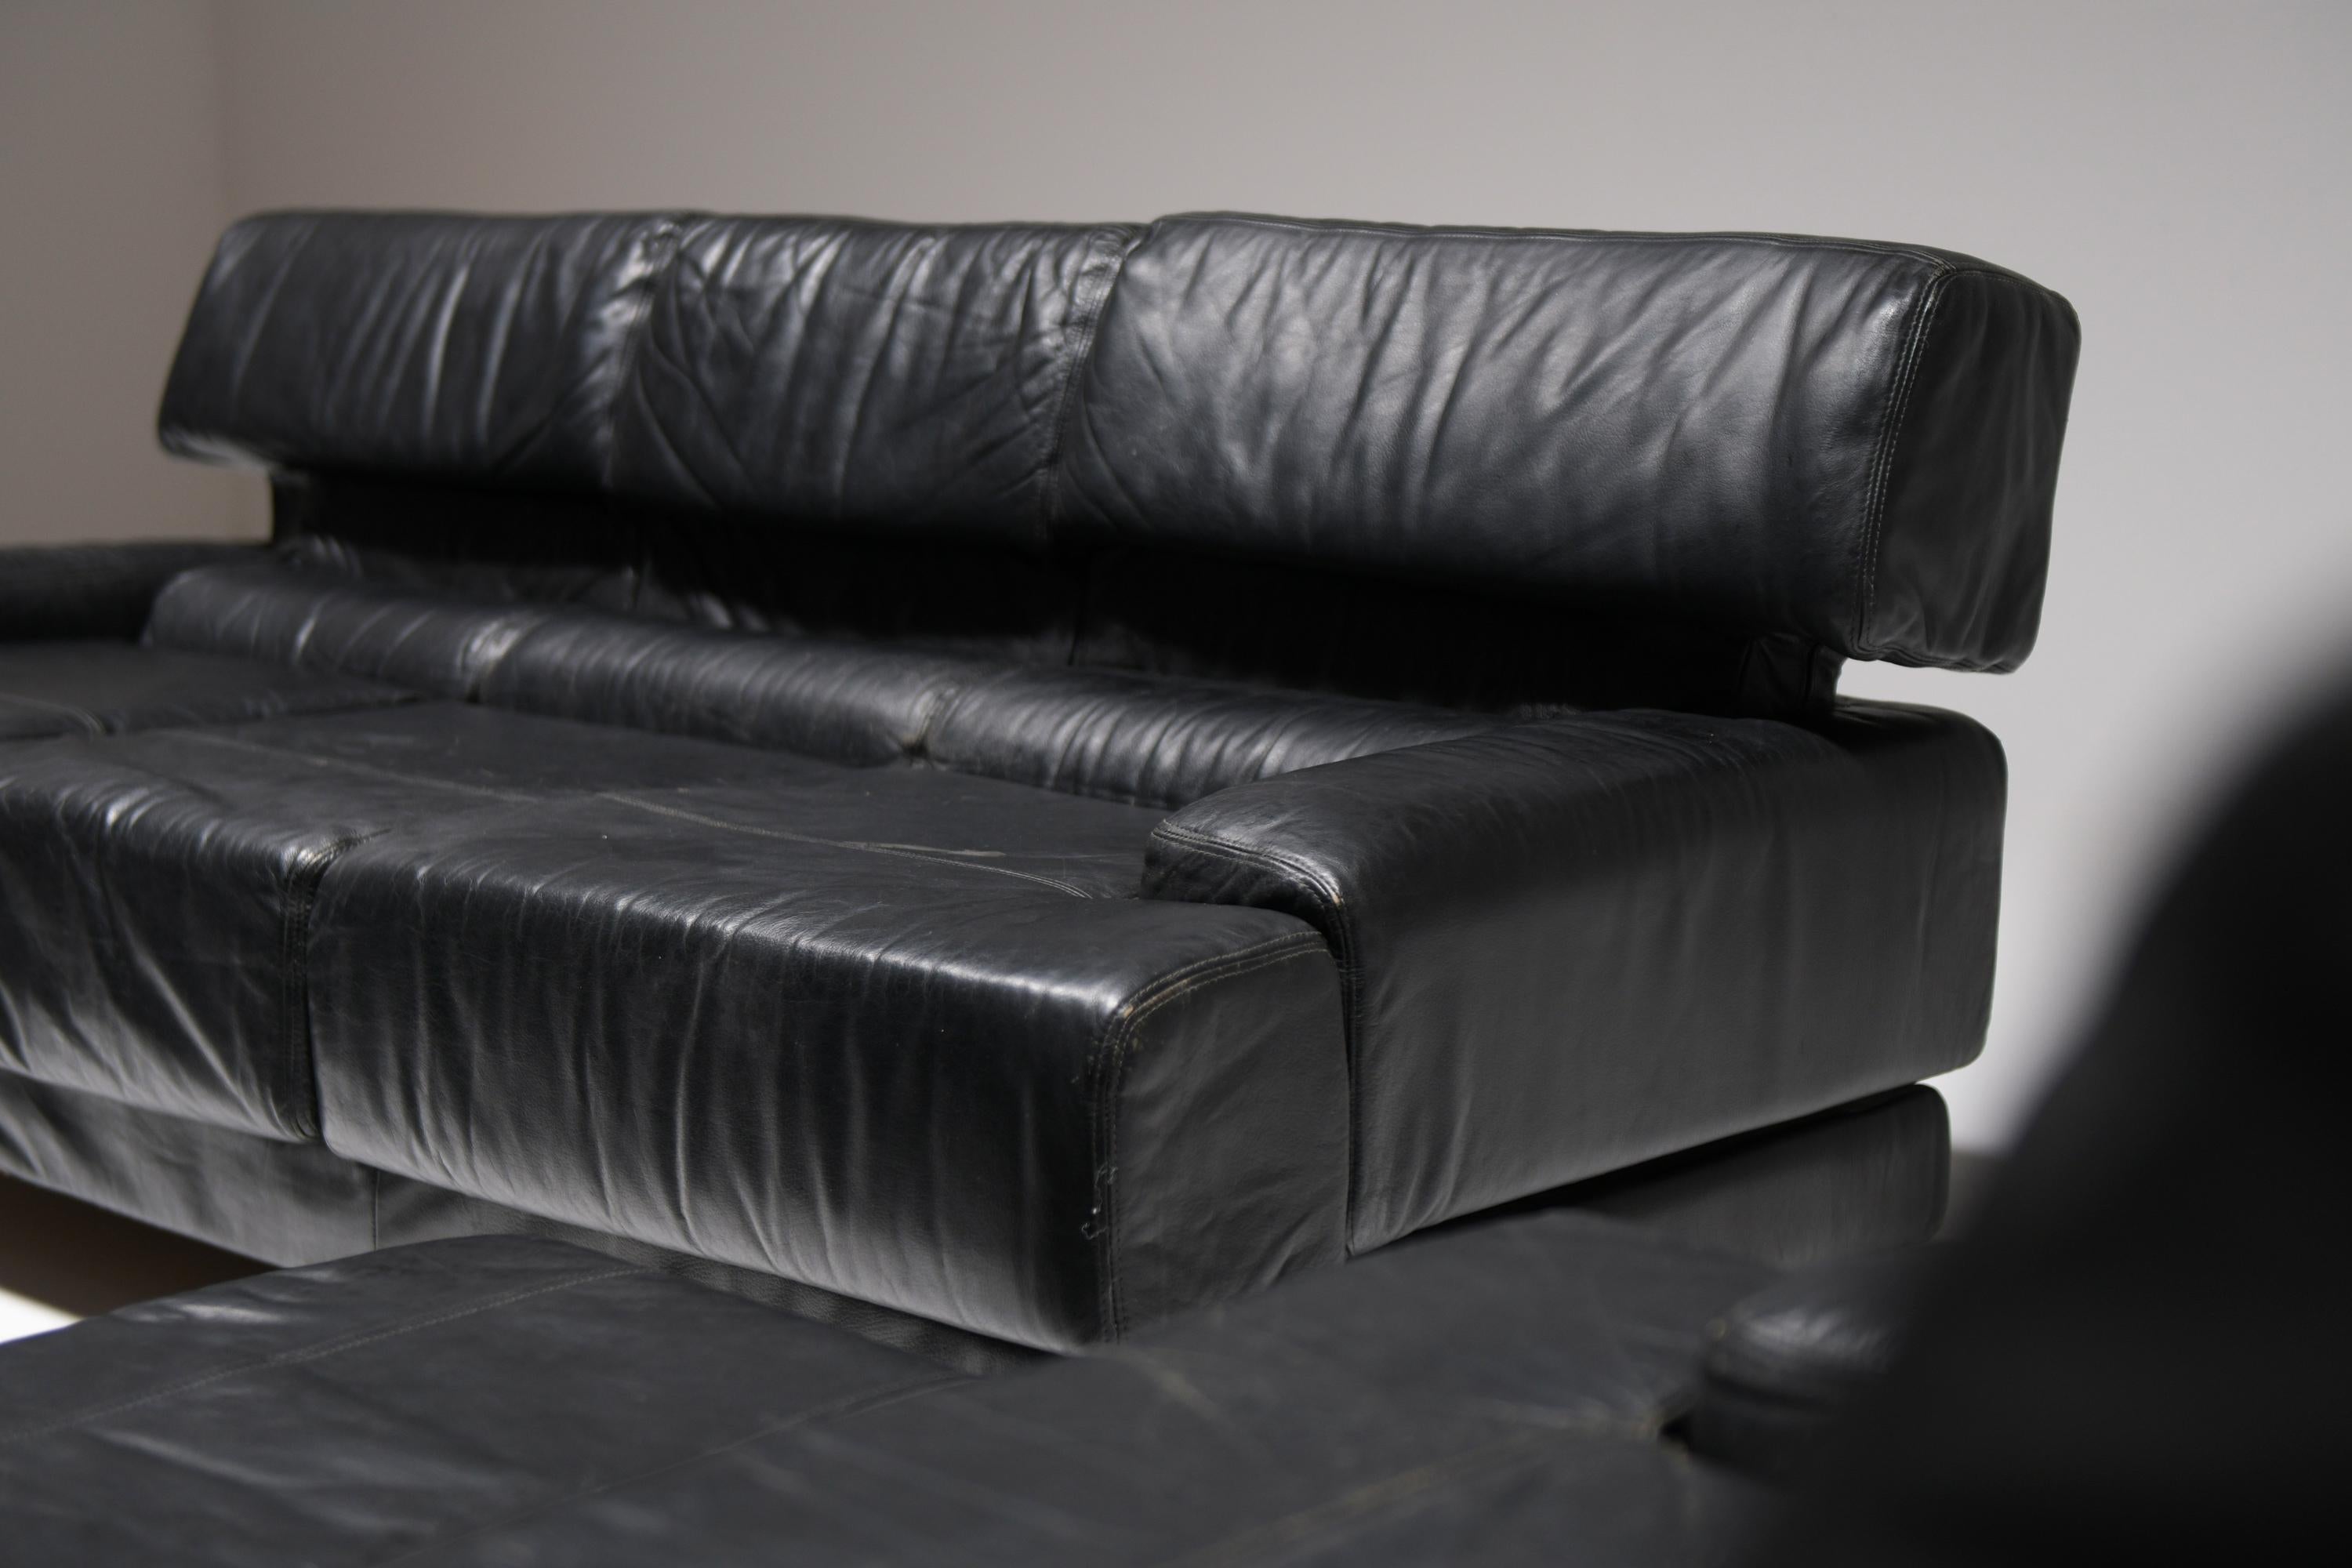 Brazilian Stunning Percival Lafer sofa set in original black leather - Lafer S.A. - Brazil For Sale